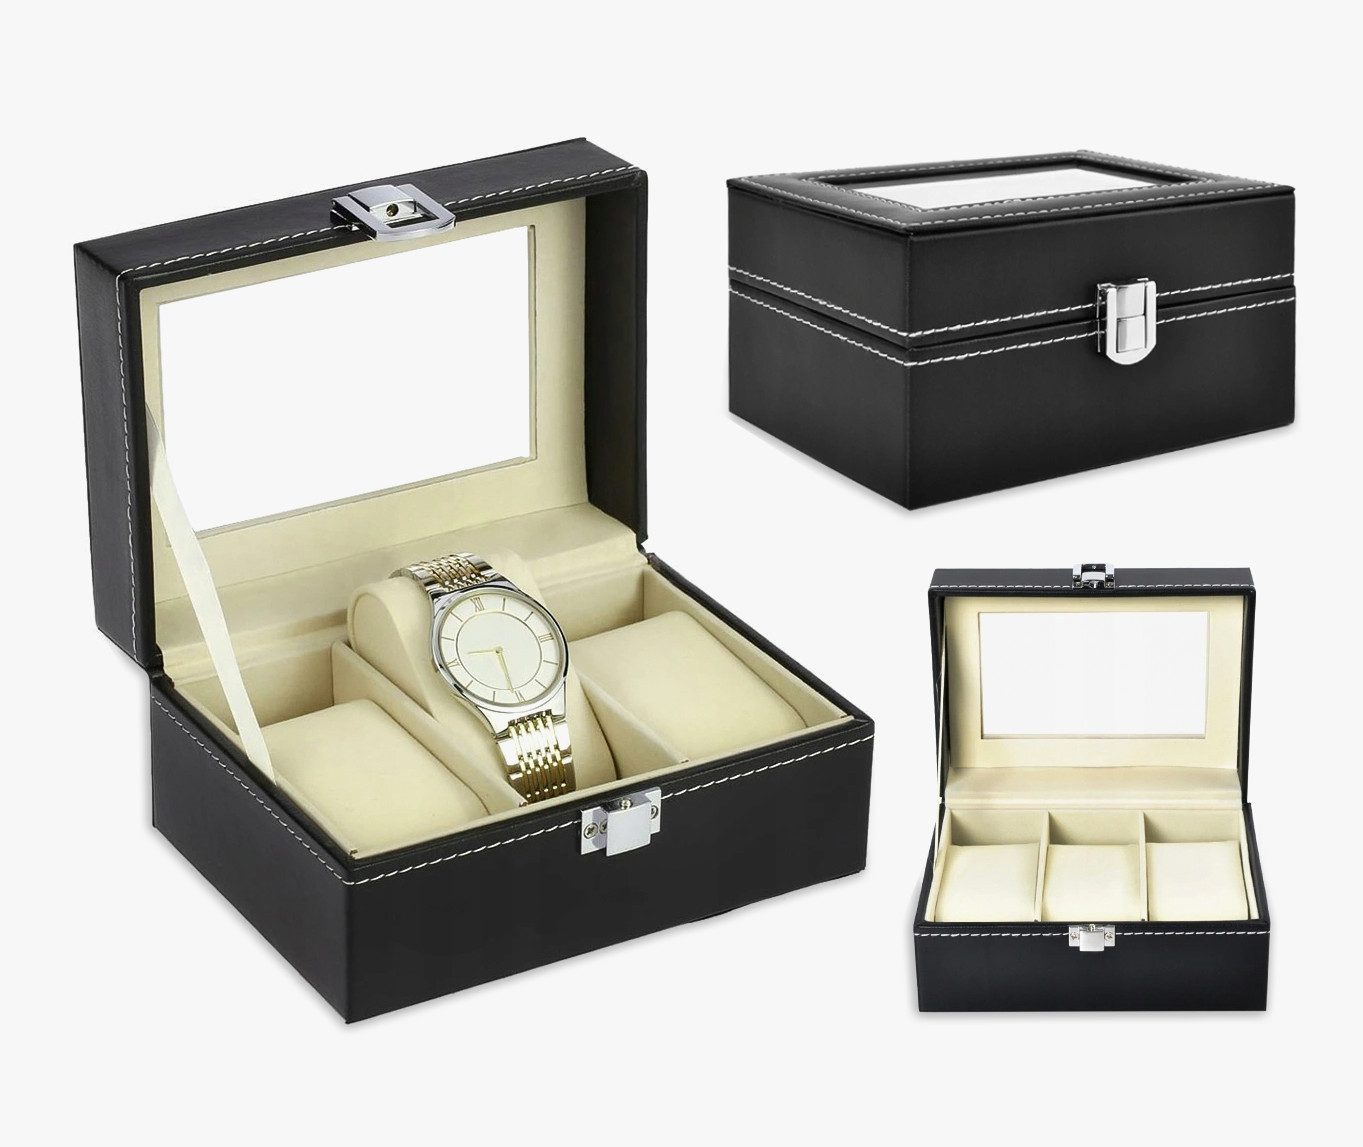 MALATEC Uhrenbox Uhrenorganizer mit 3 Fächern, Stilvoller Uhrenorganisator aus hochwertigem Öko-Leder